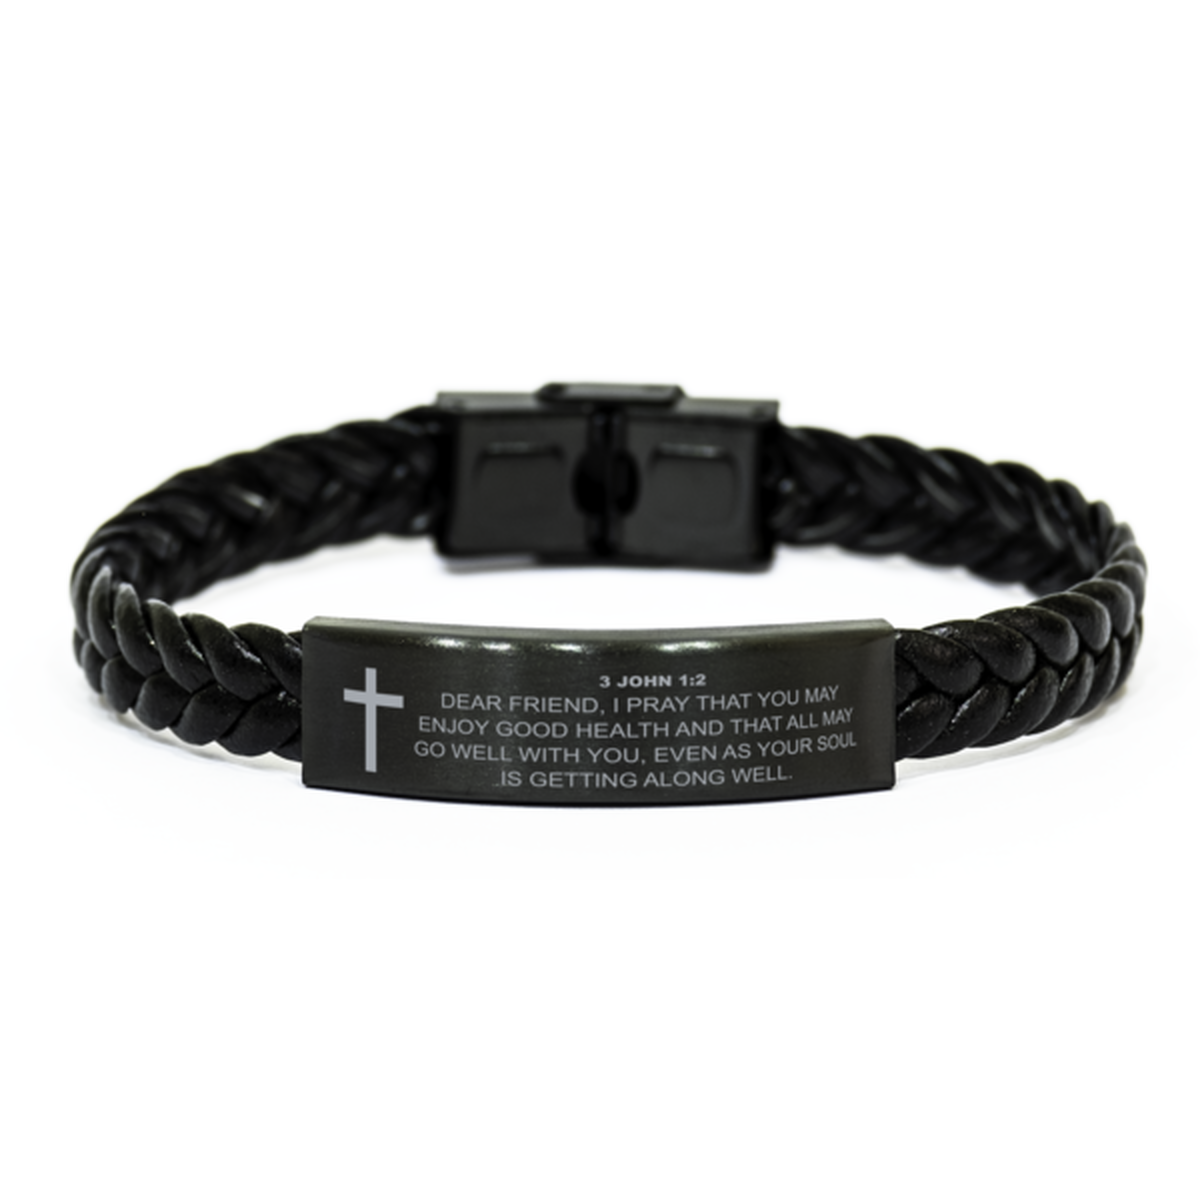 3 John 1:2 Bracelet, Dear Friend I Pray That You May Enjoy Good Health, Bible Verse Bracelet, Christian Bracelet, Braided Leather Bracelet